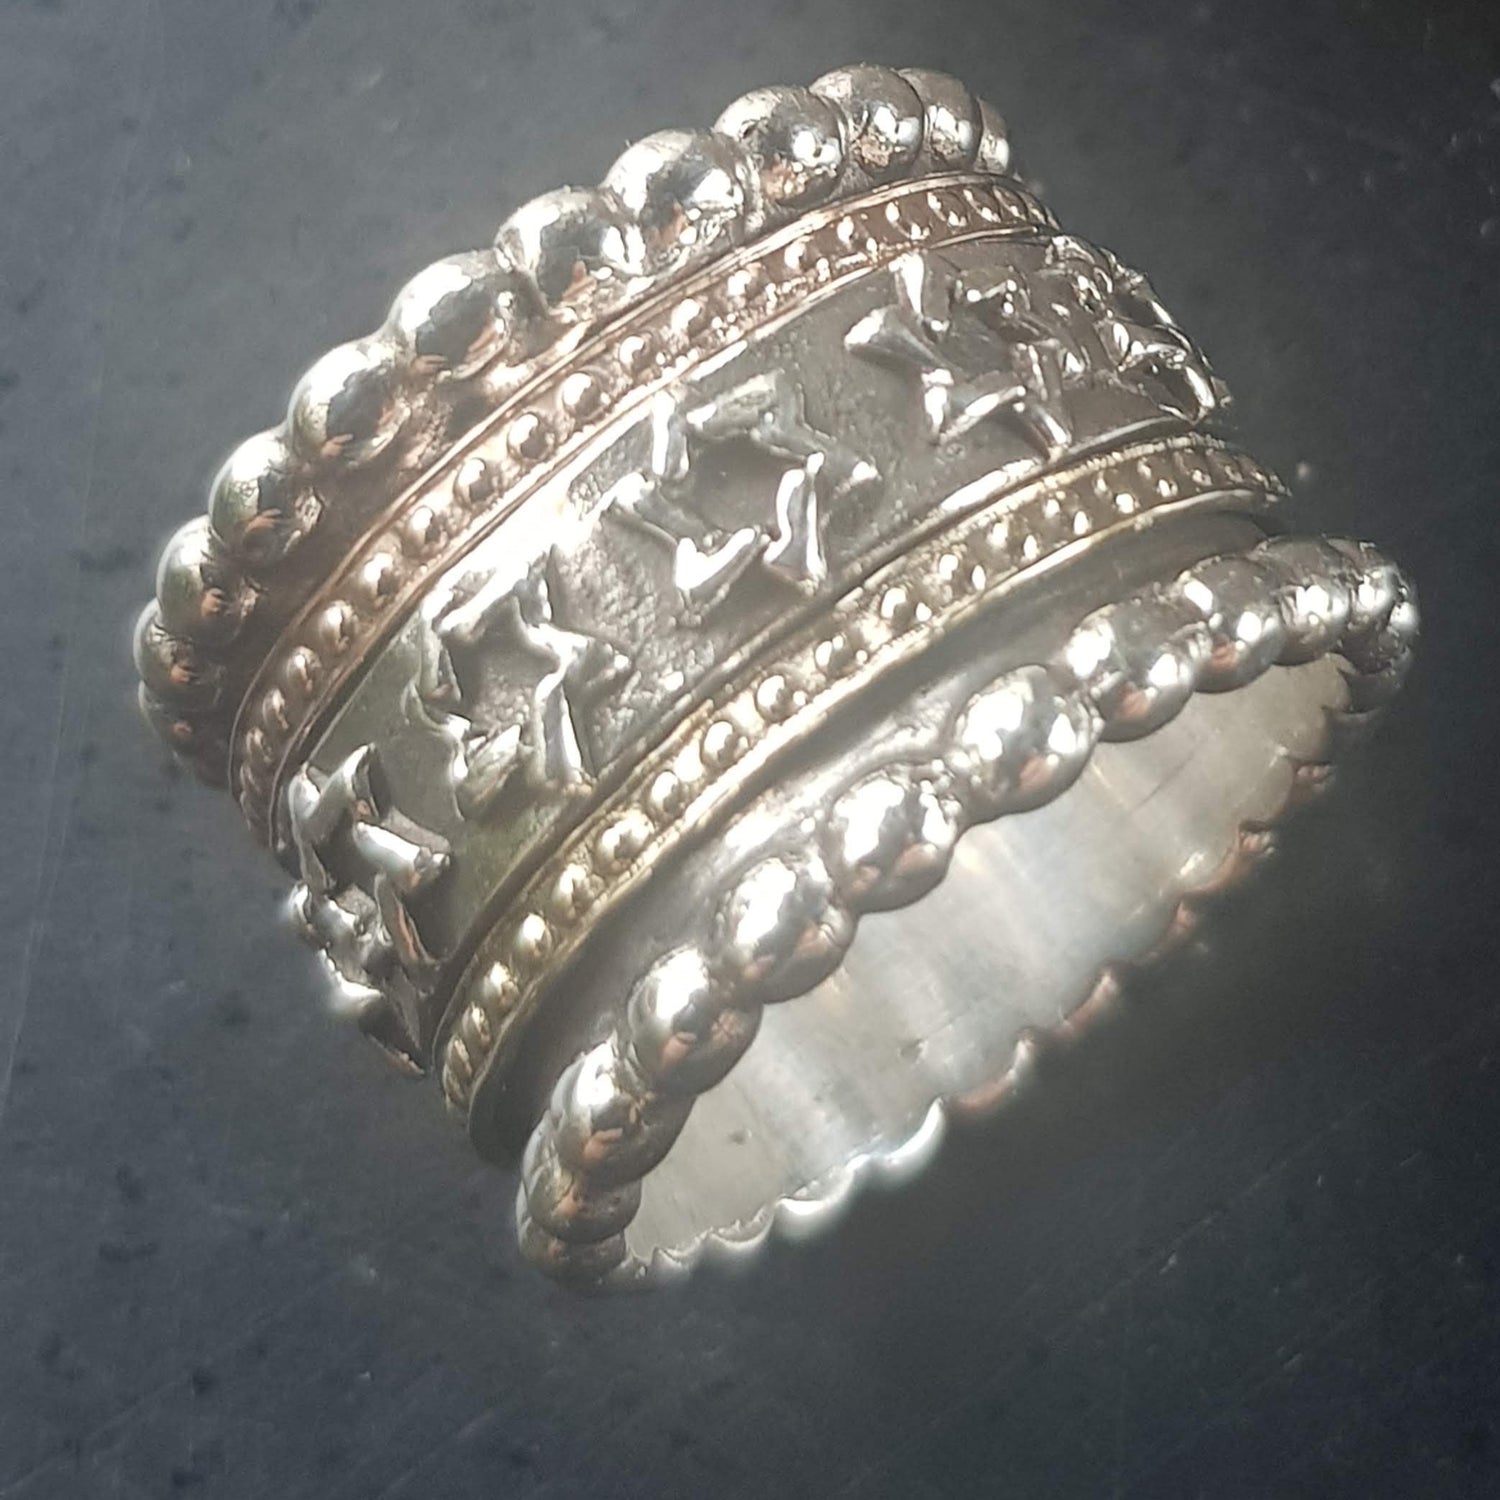 Bluenoemi Rings Jewish Star of David spinner ring.  Israeli Spinner Rings silver & gold